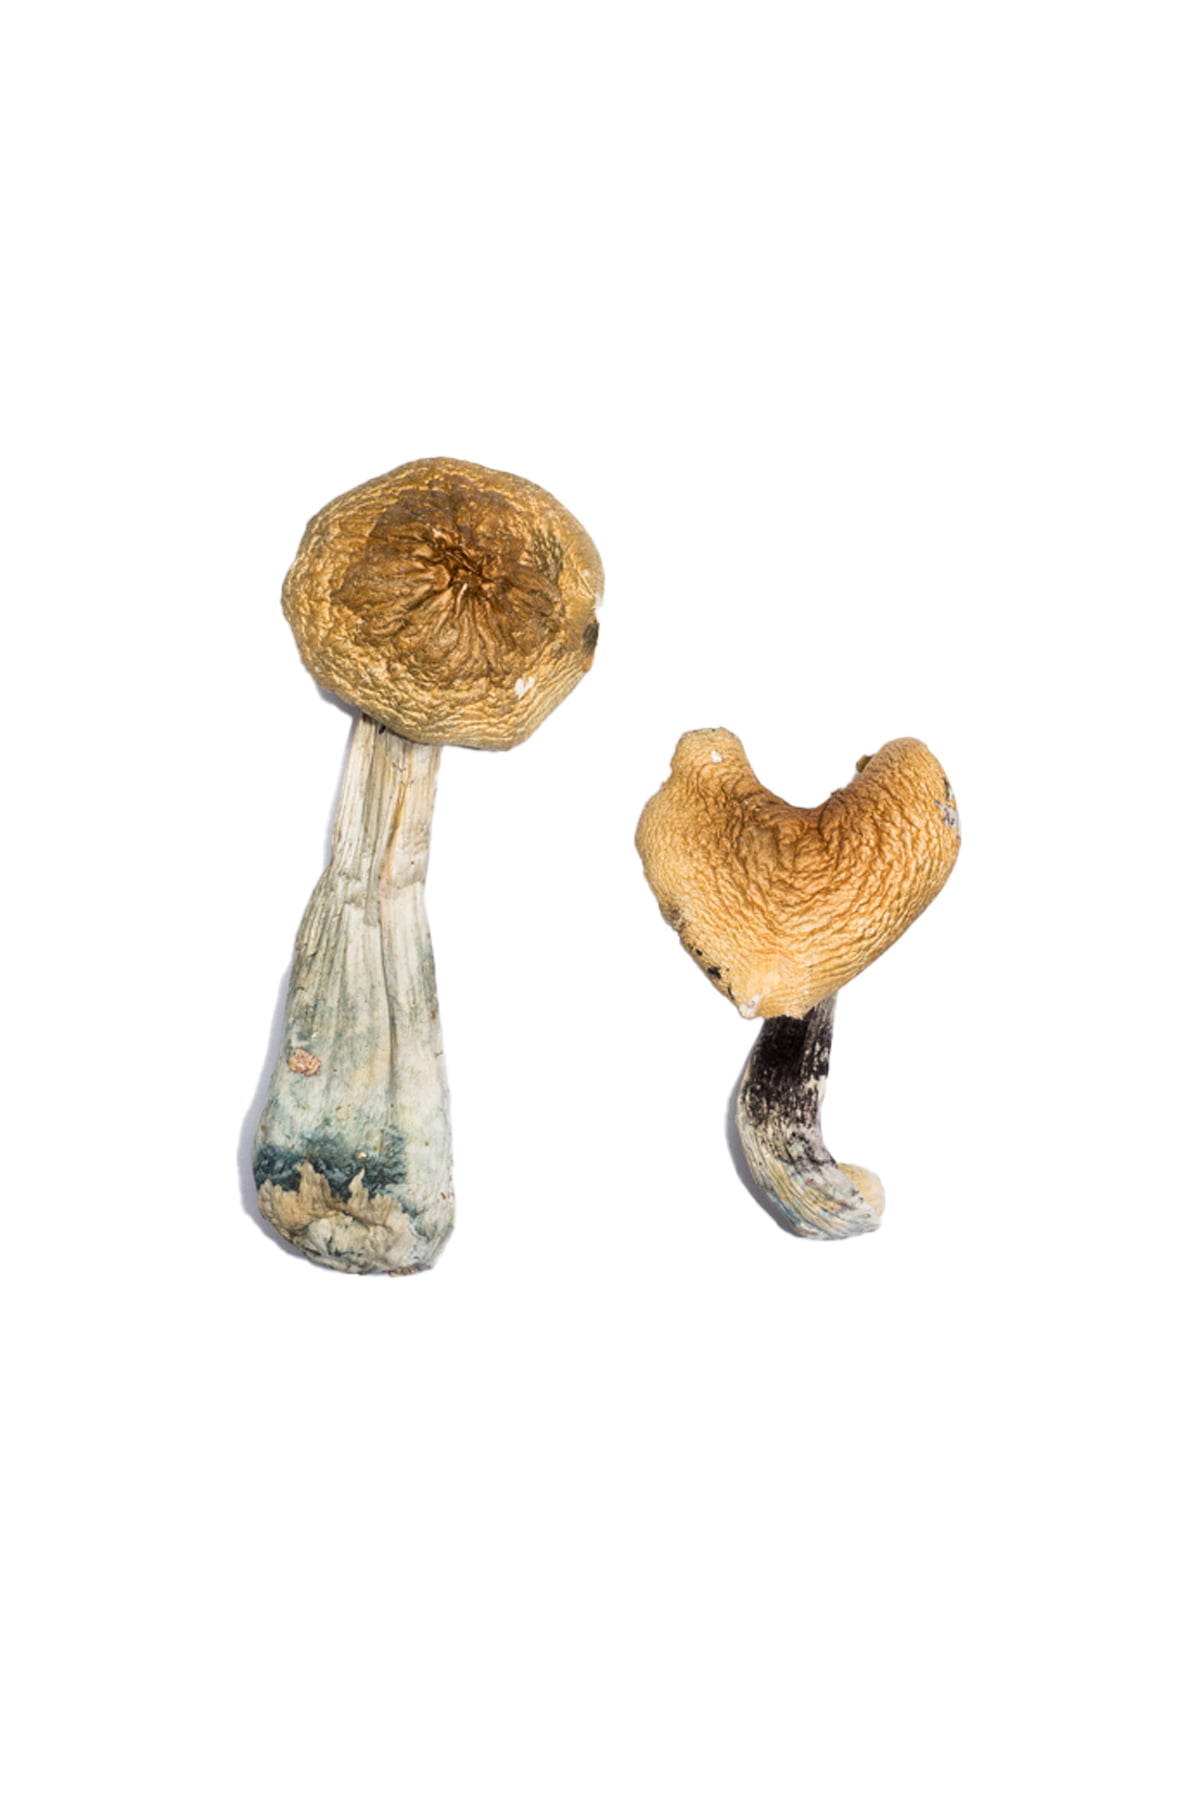 Buy McKennaii Magic Mushrooms online In Canada